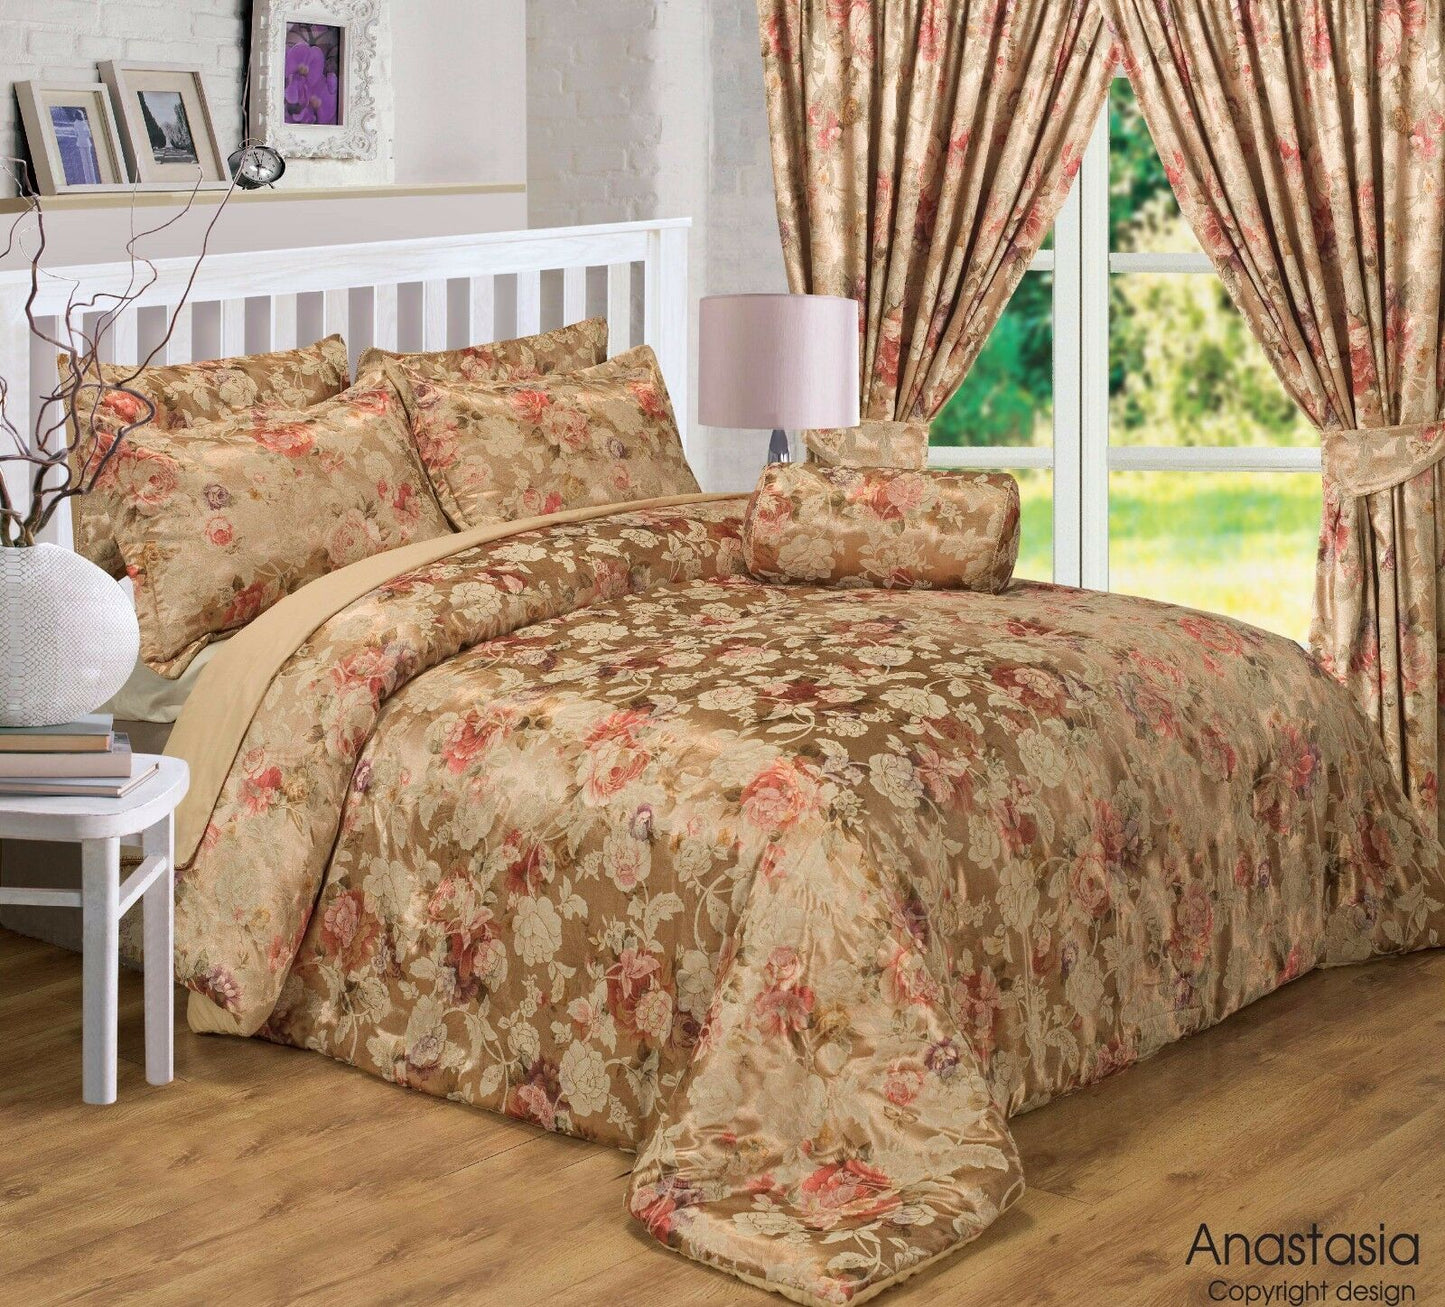 Emperor Size Anastasia Duvet Cover Set Luxury Jacquard Floral Bedding